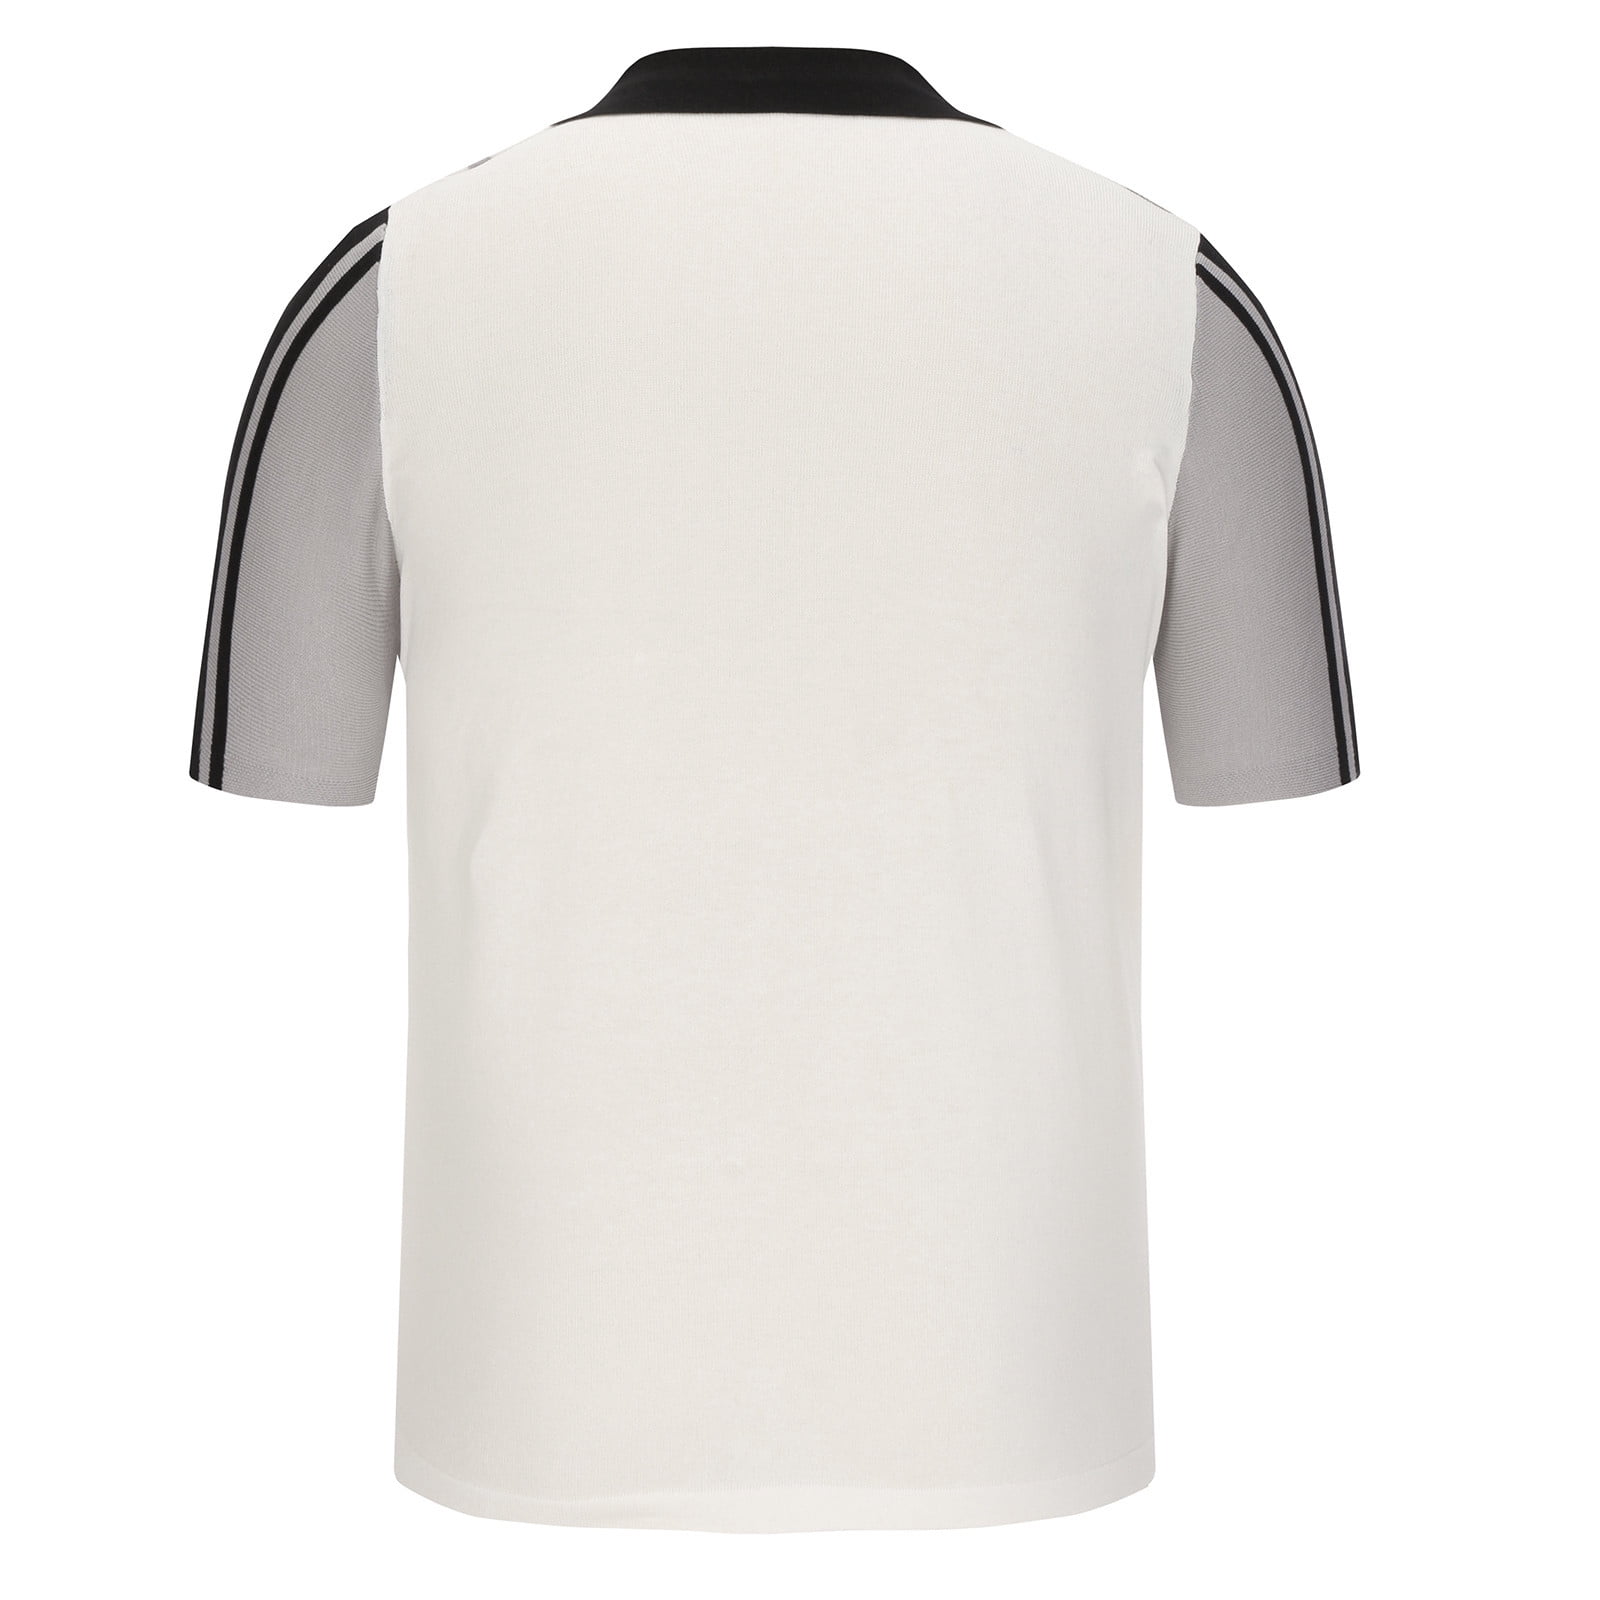 Juebong Fashion Knit Polo Shirts for Men Black Cardigan Slim Fit Short  Sleeve Button Vacation Golf Shirts Tops, XX-Large, Black